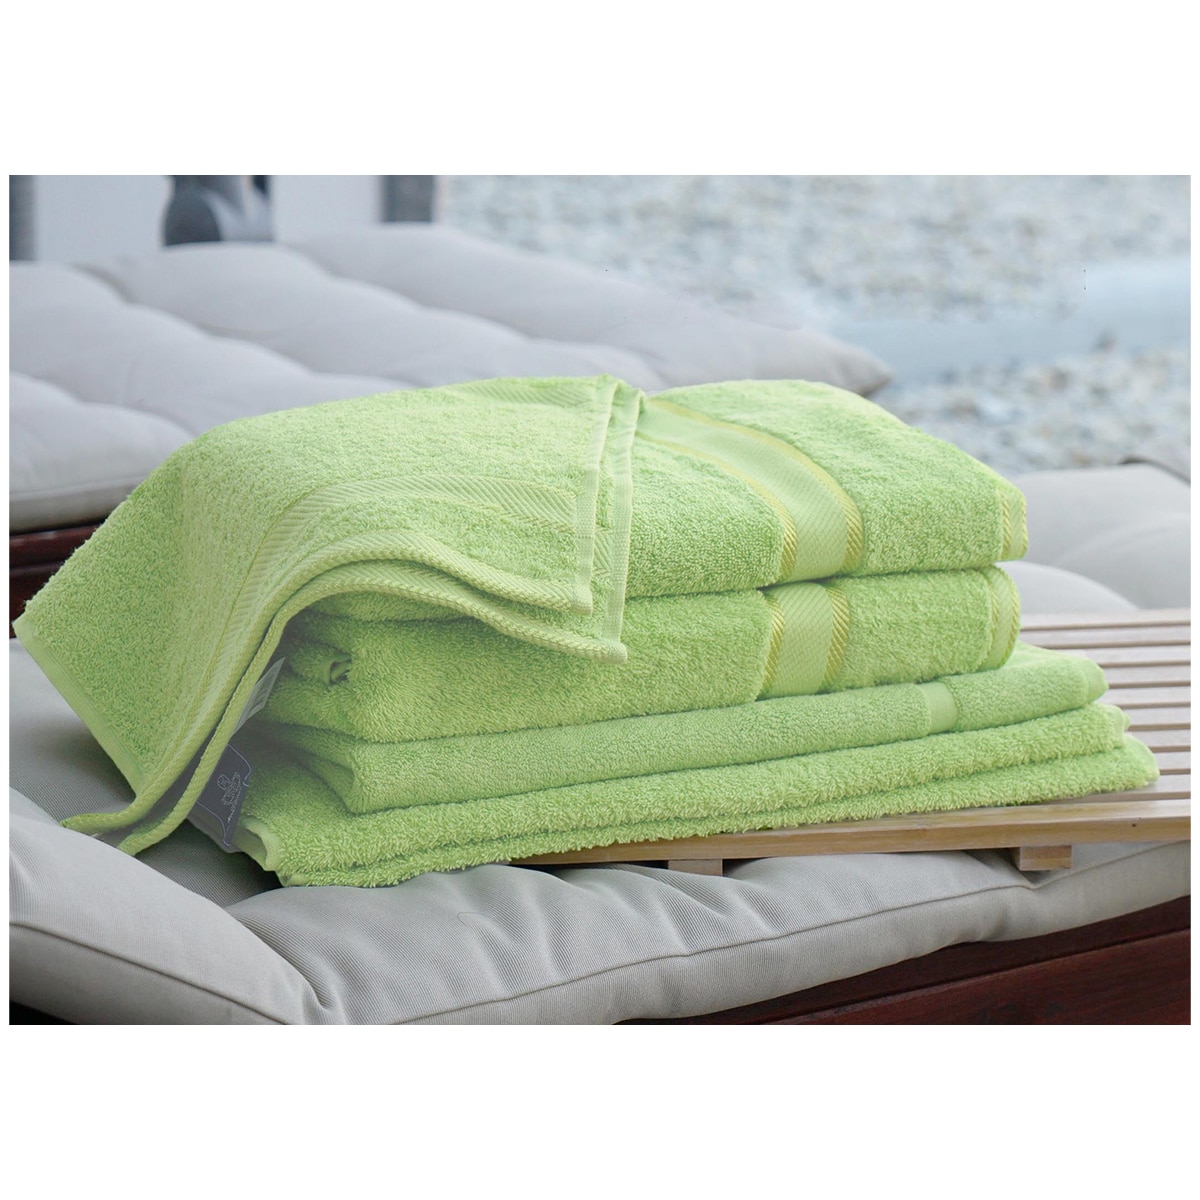 Kingtex Plain dyed 100% Combed Cotton towel range 550gsm Bath Sheet set 7 piece - New Apple